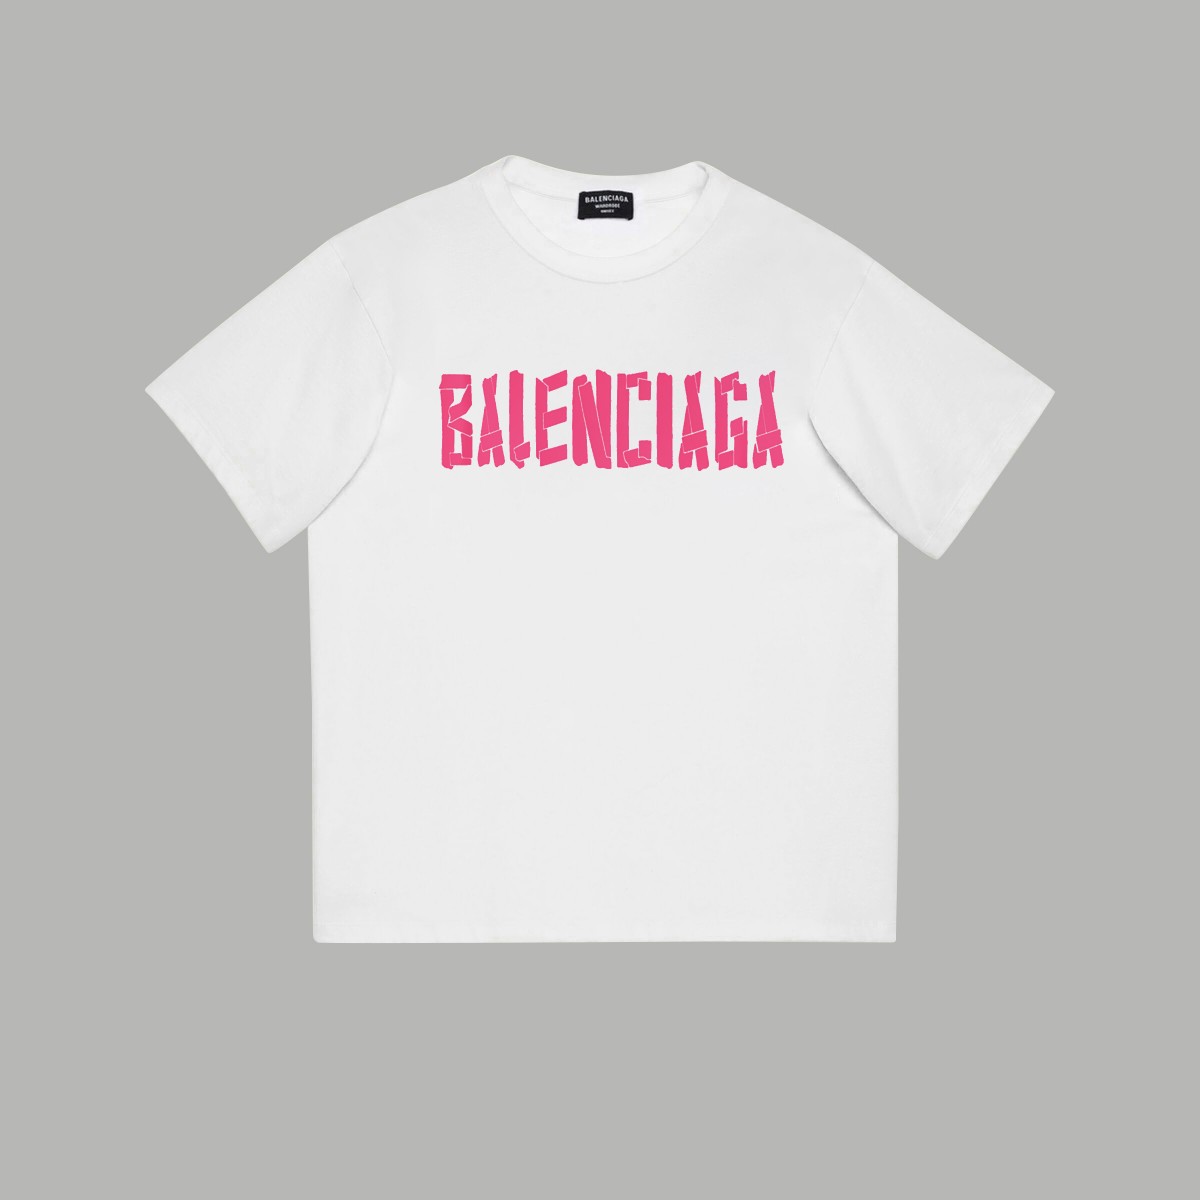 Balenciaga Clothing T-Shirt Pink Printing Unisex Cotton Spring/Summer Collection Short Sleeve